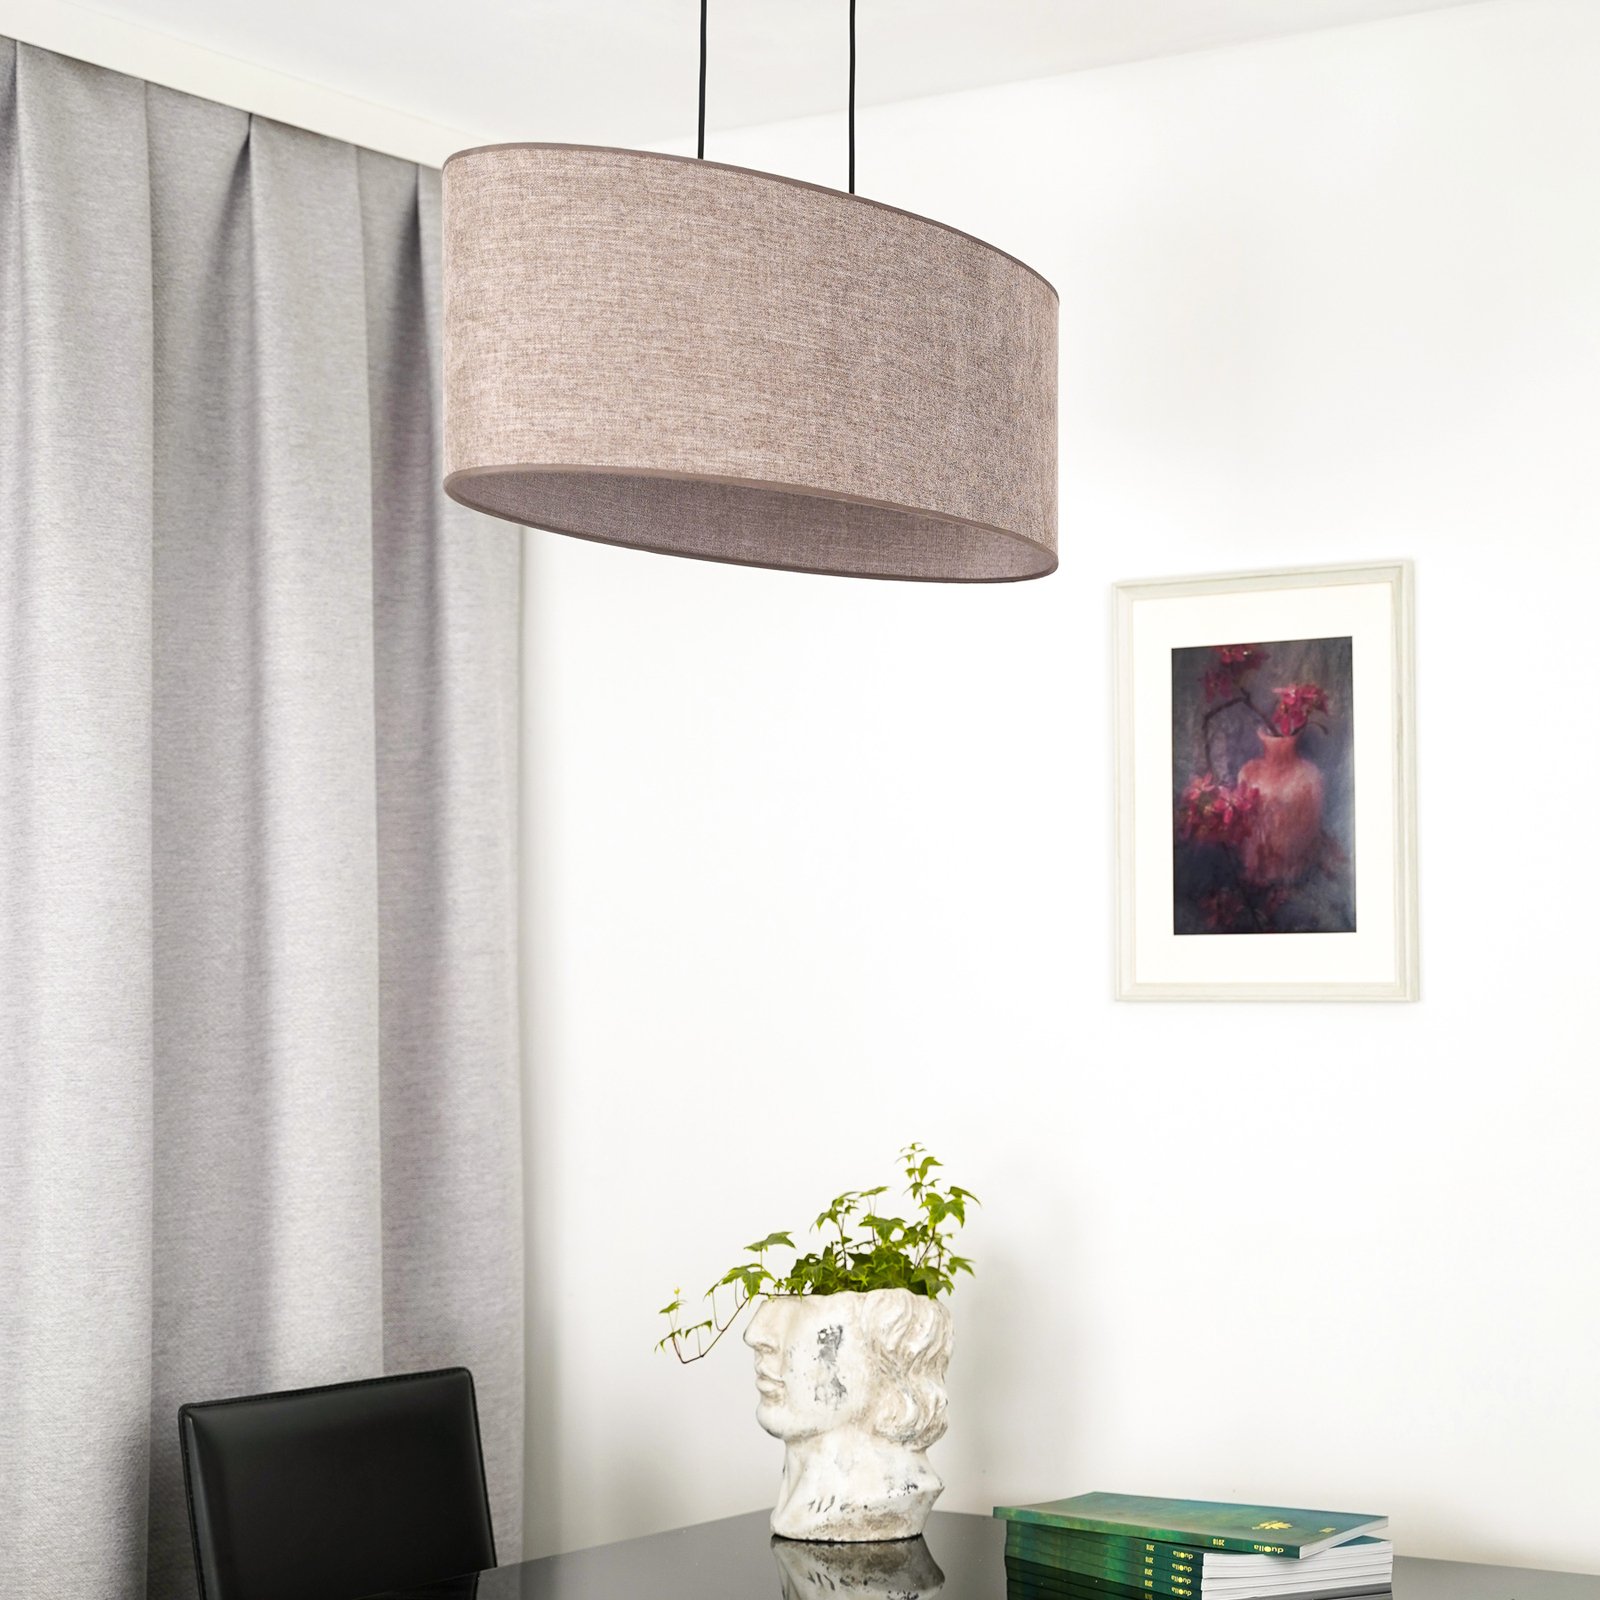 Euluna hanglamp Celine, cappuccino, chenille stof, 80 cm